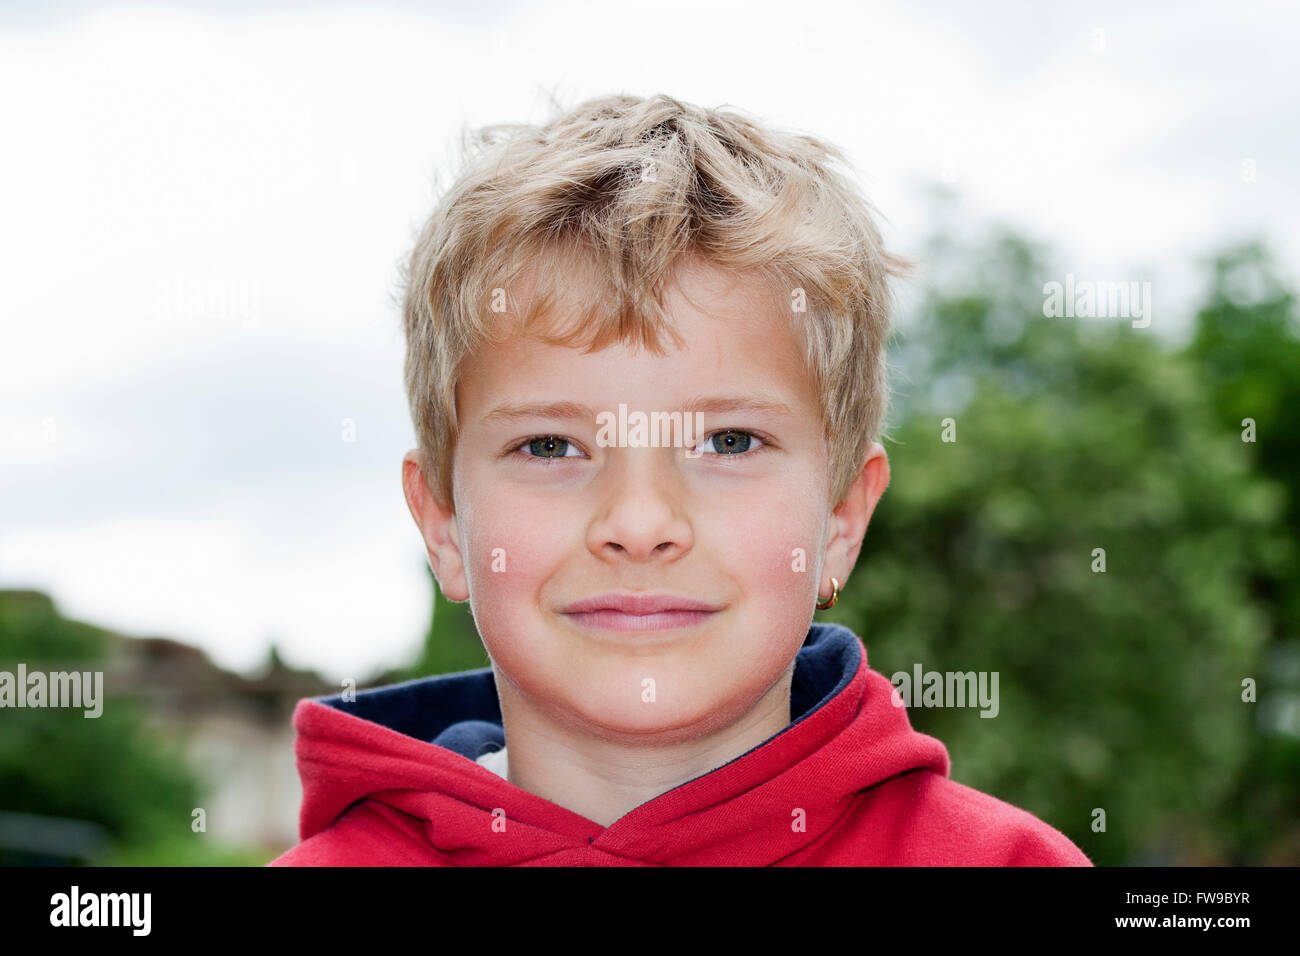 Junge mit Ohrring, Porträt Stockfotografie - Alamy